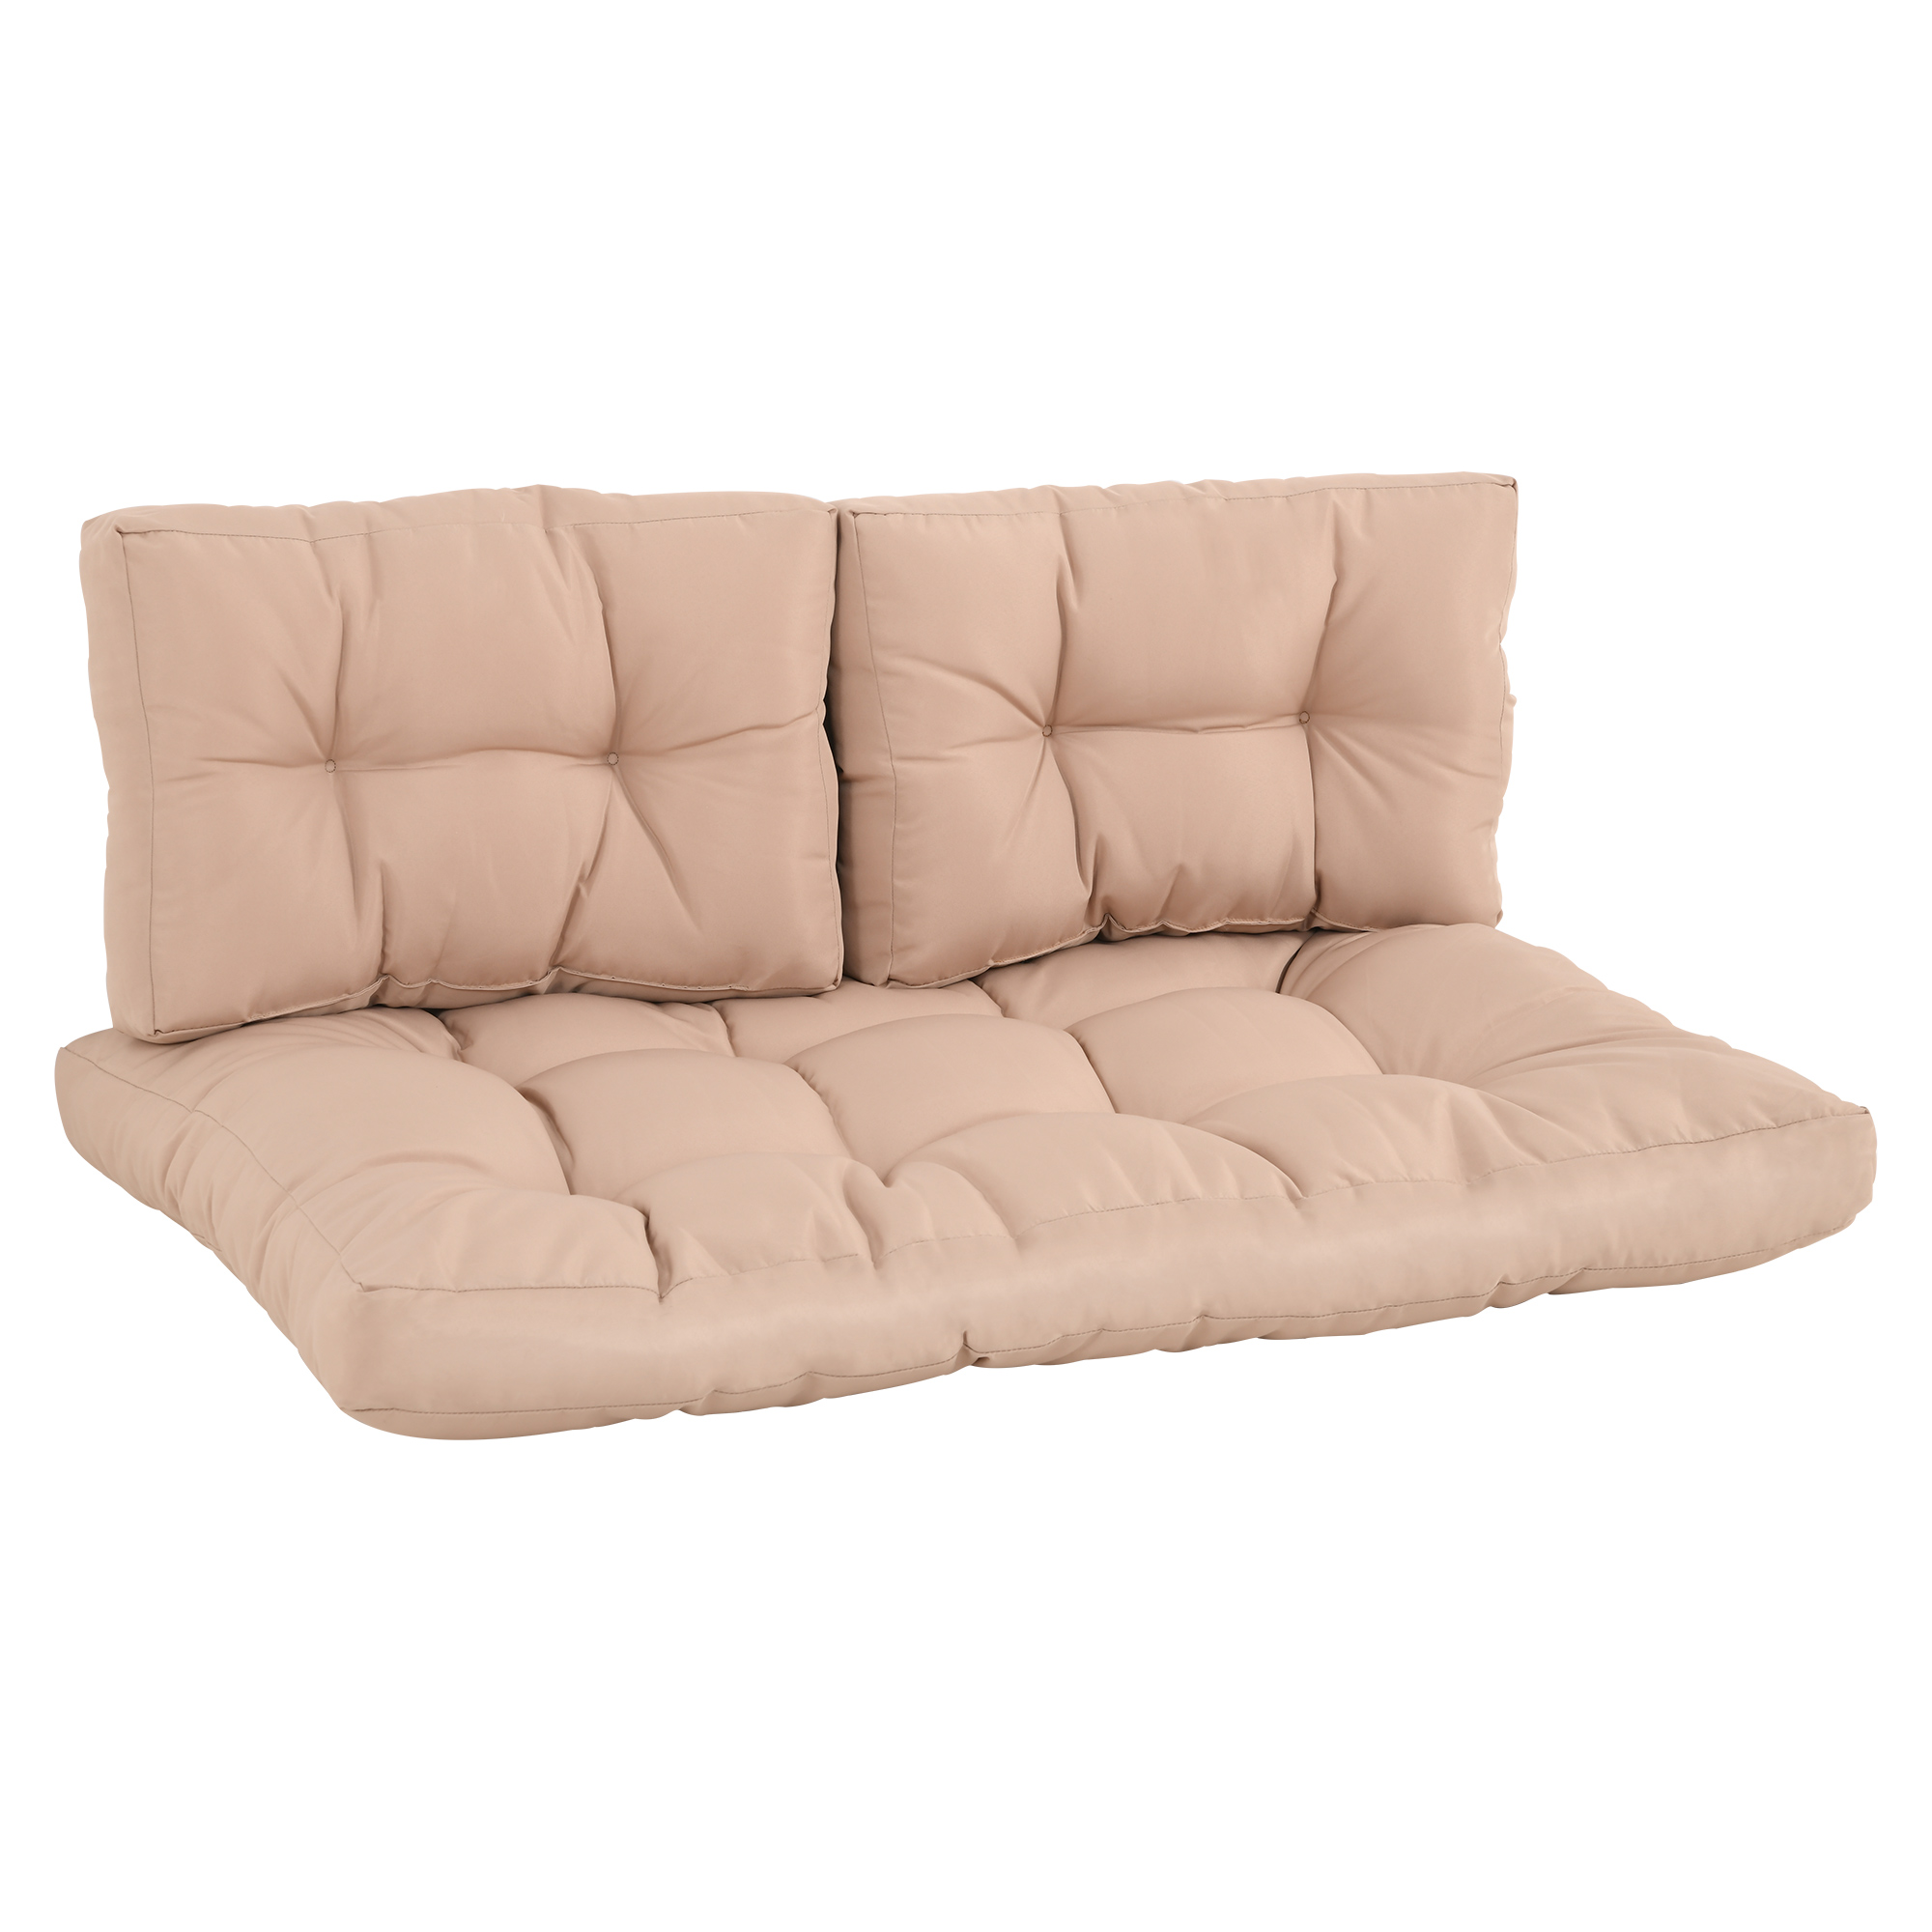 Outsunny Pallet Cushions Σετ με 3 μαξιλάρια καθίσματος και πλάτης για καναπέδες Πάγκος με πάγκους